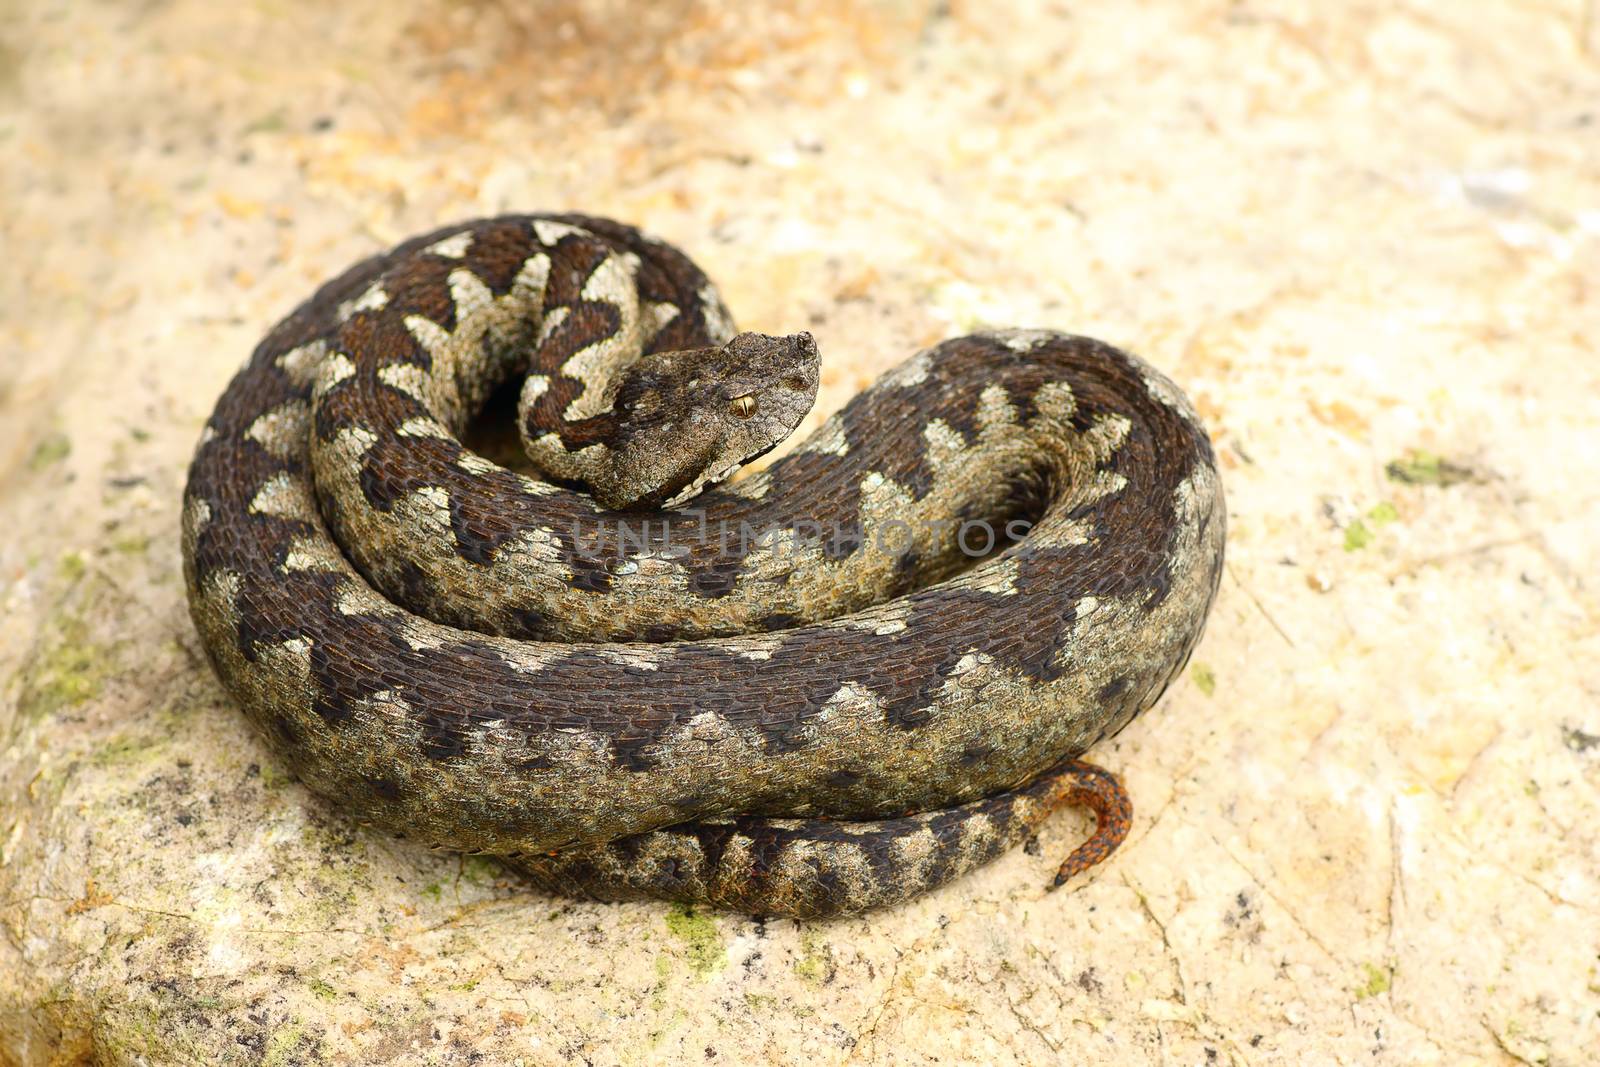 sand viper basking on a rock ( Vipera ammodytes, the most poisonous european snake )